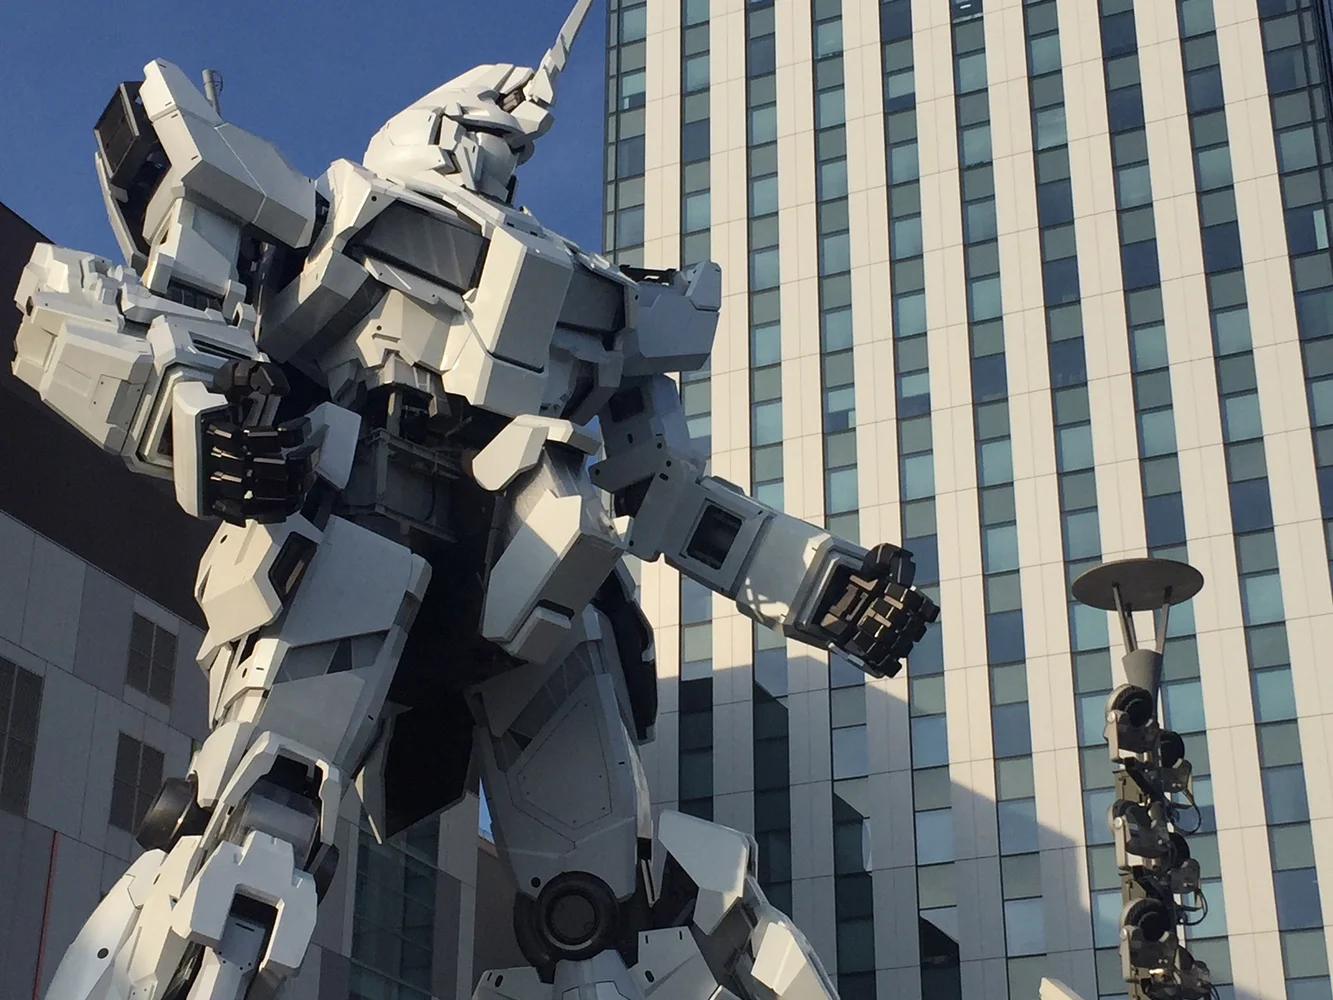 19.7m huge Gundam statue in Odaiba.